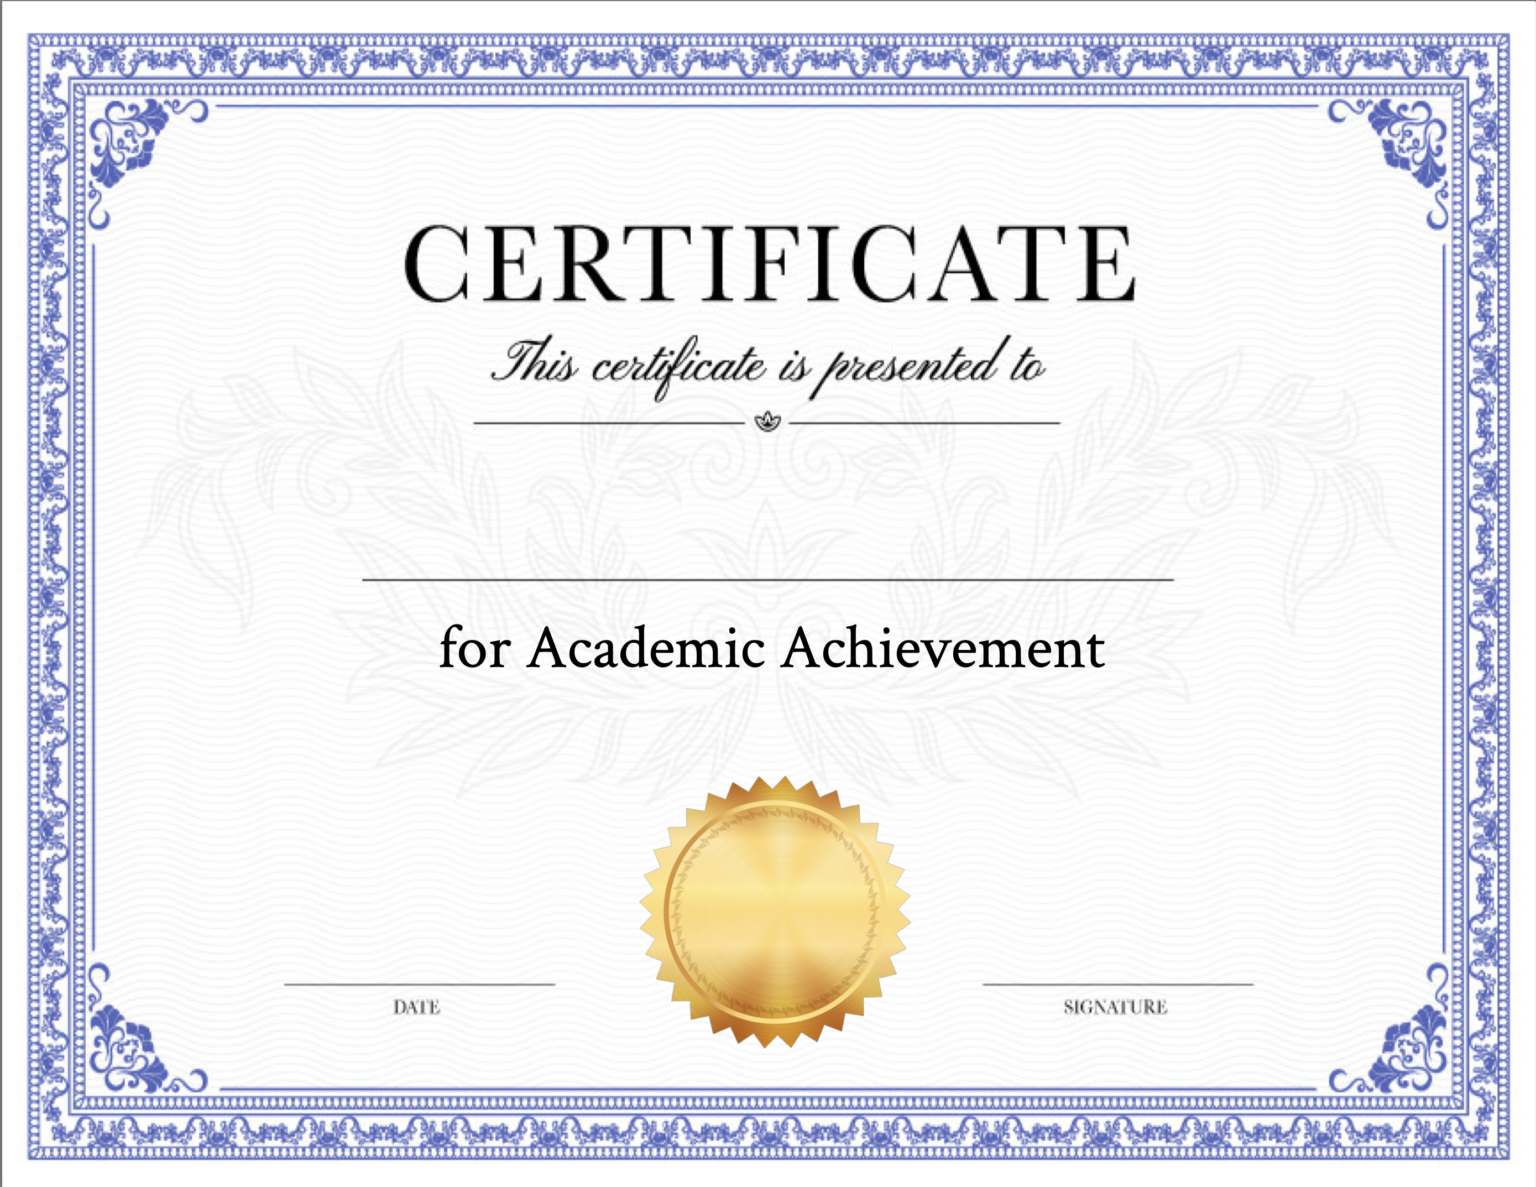 certificate-of-achievement-templates-simplecert